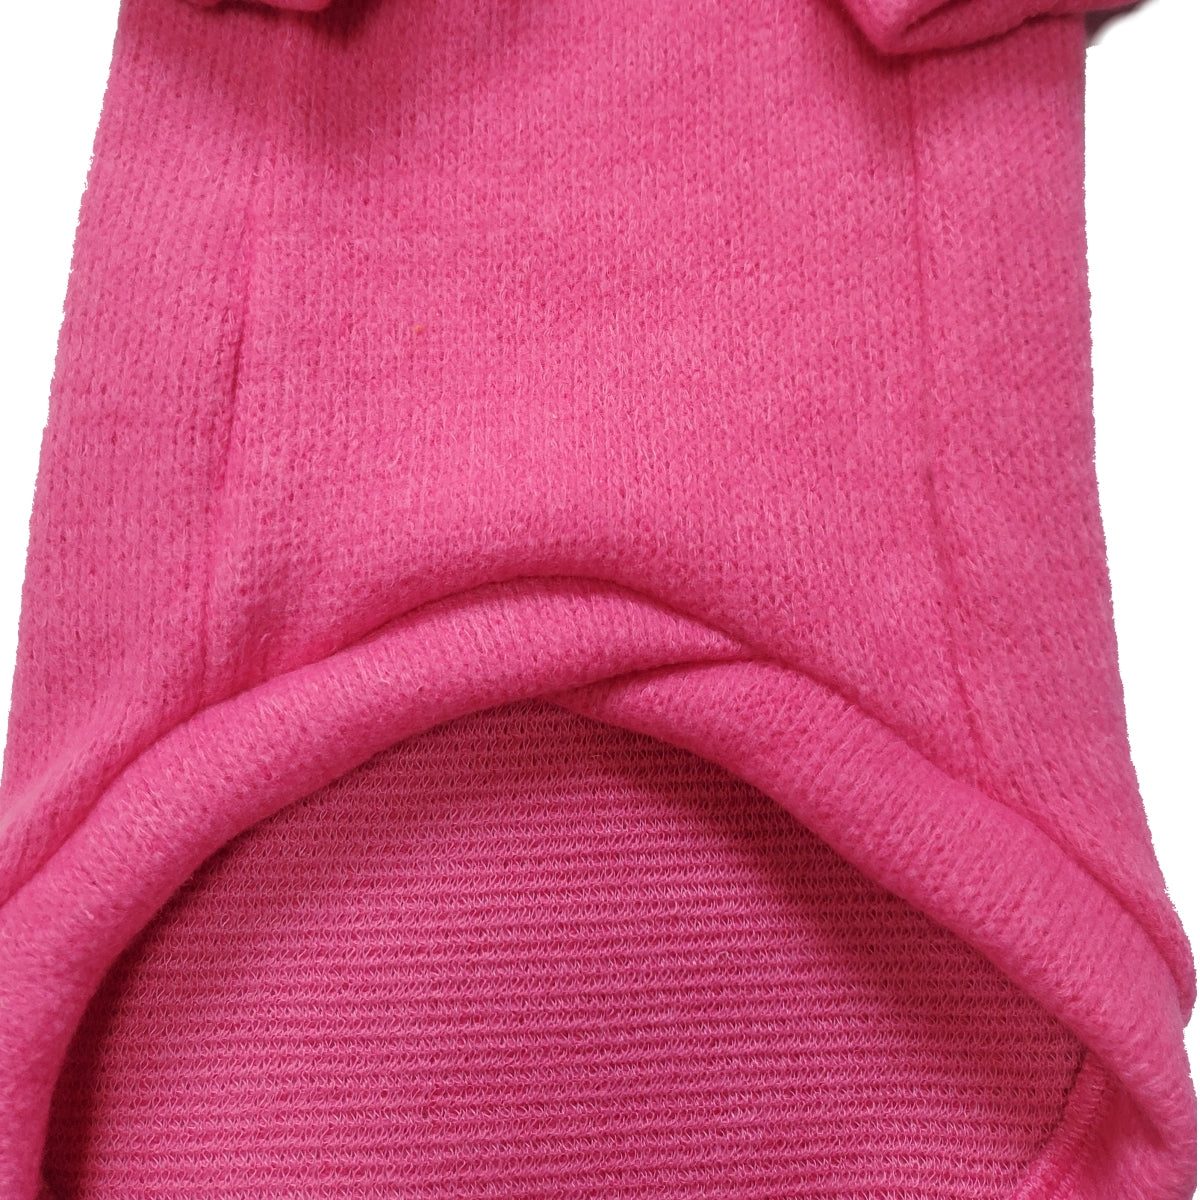 Sphynx Cat Hot Pink Sweater